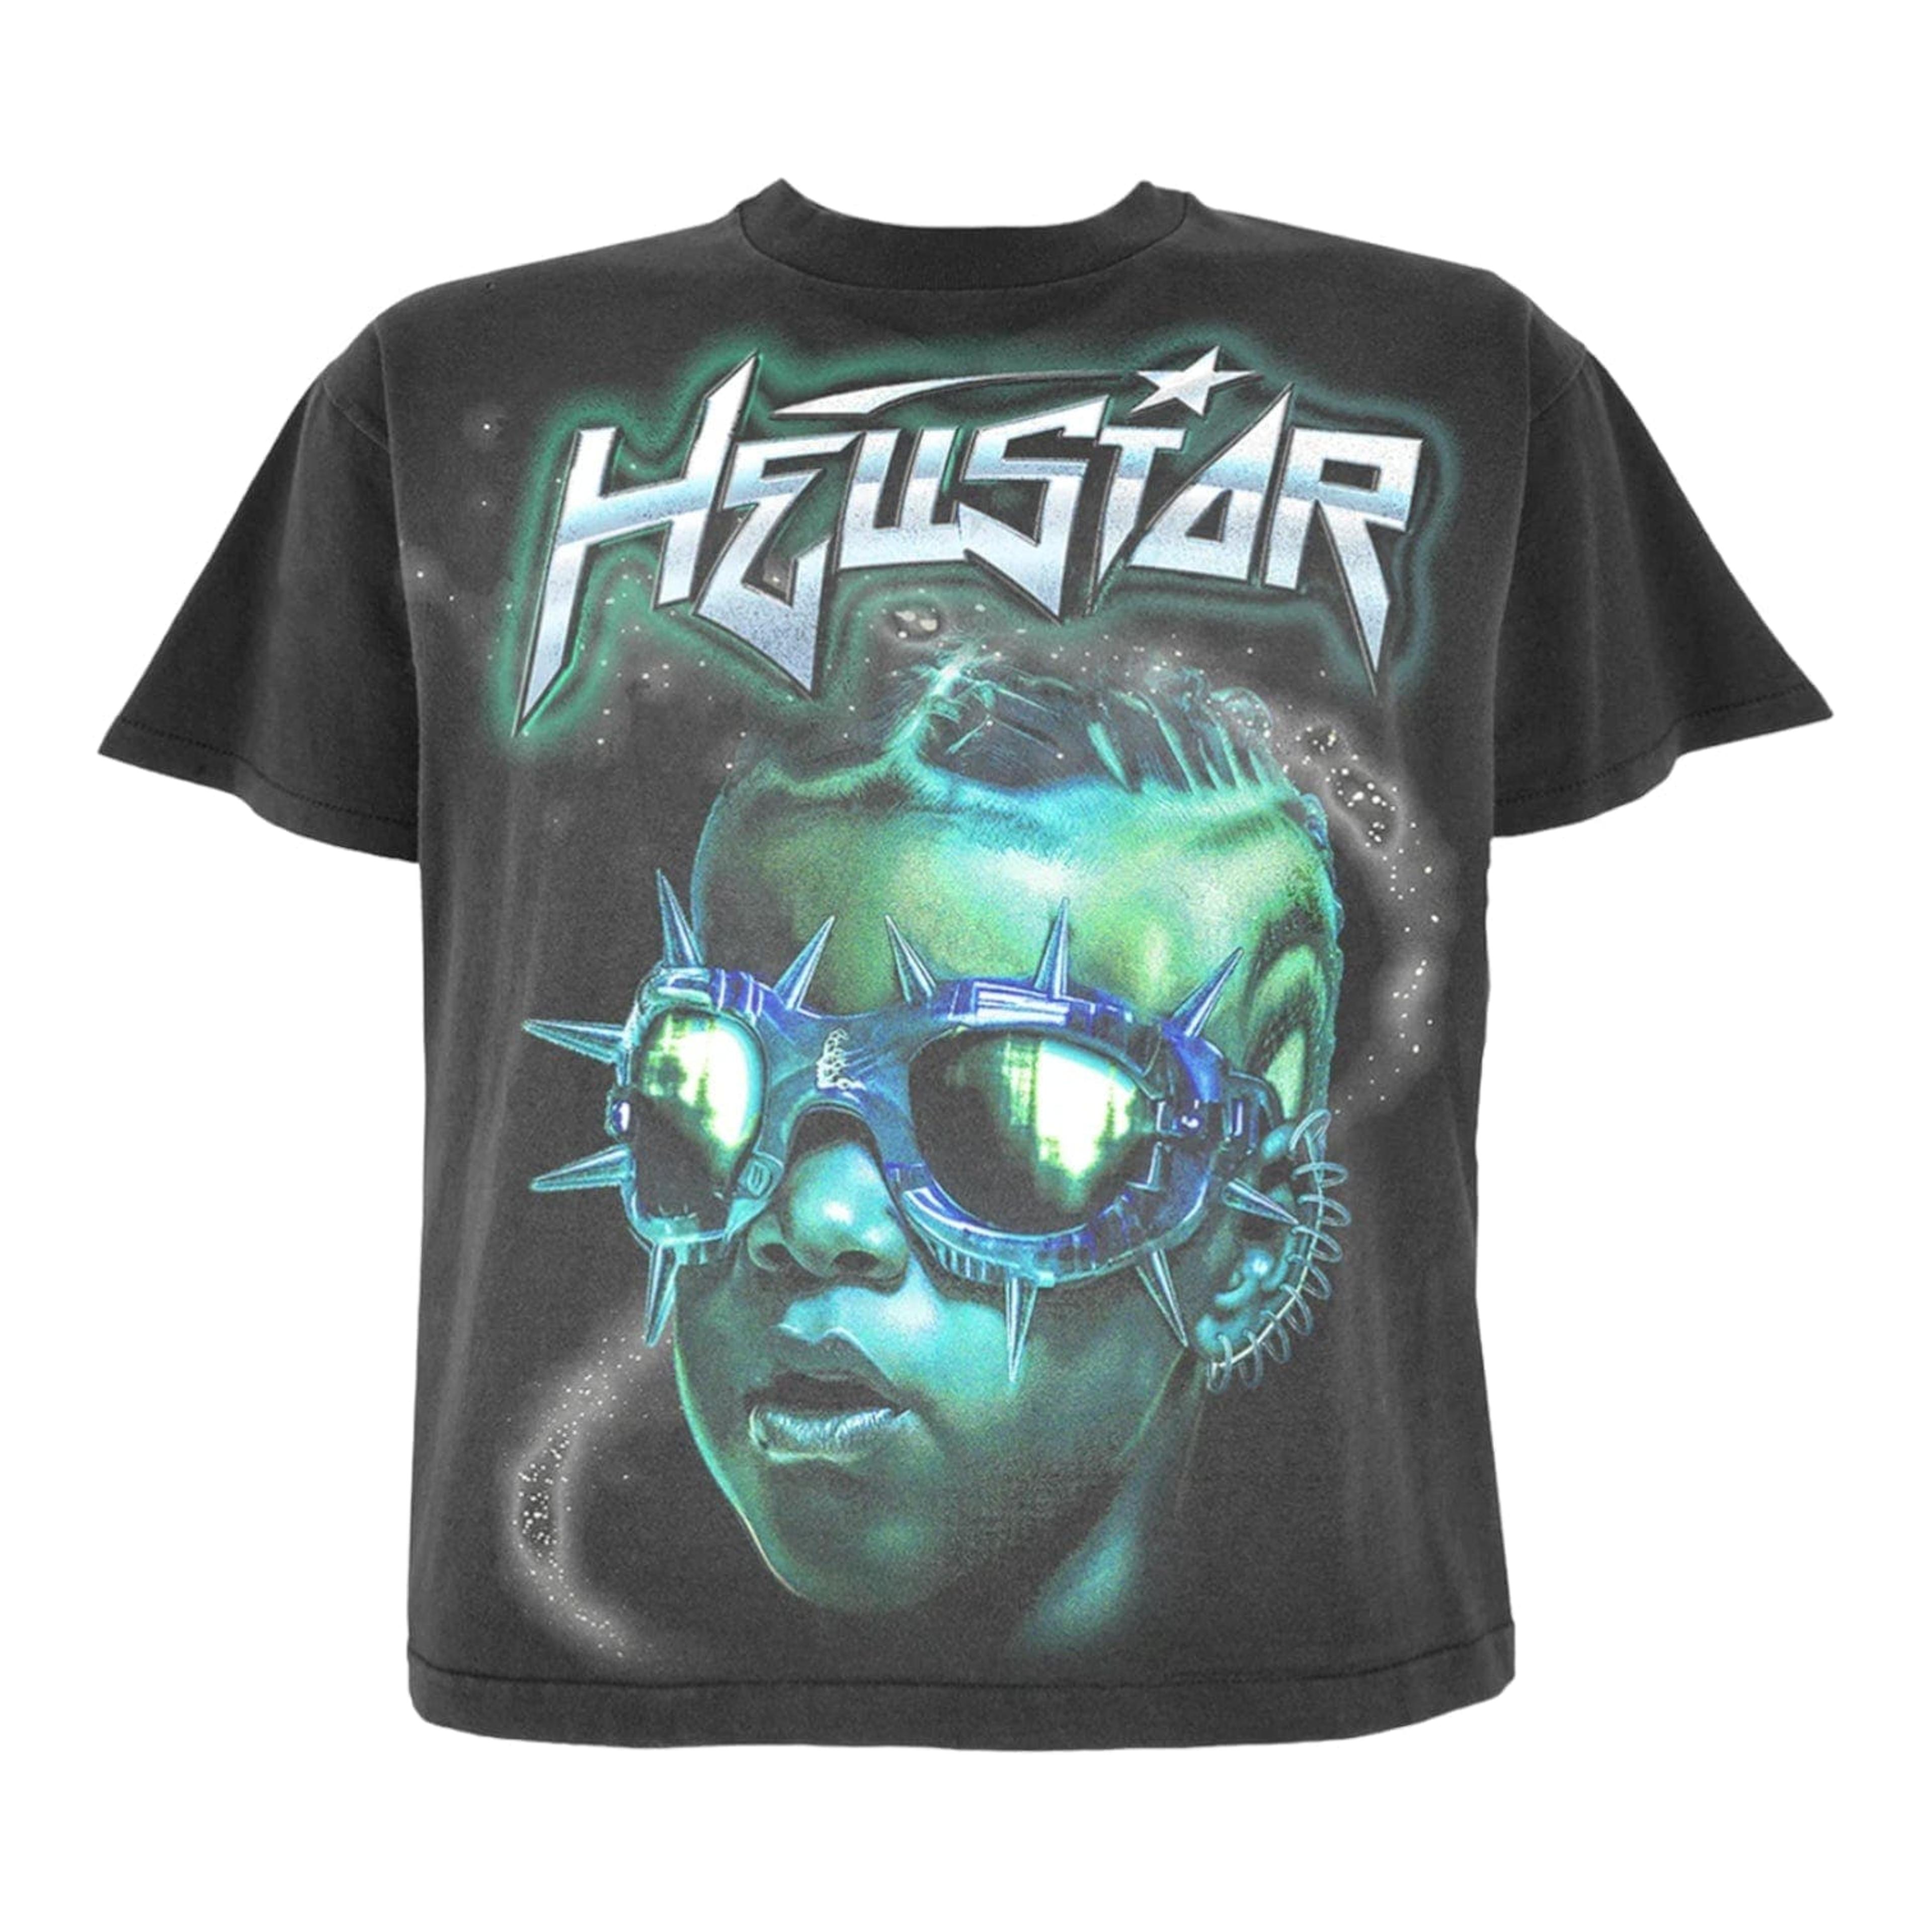 Hellstar Studios The Future Short Sleeve Tee Shirt Washed Black